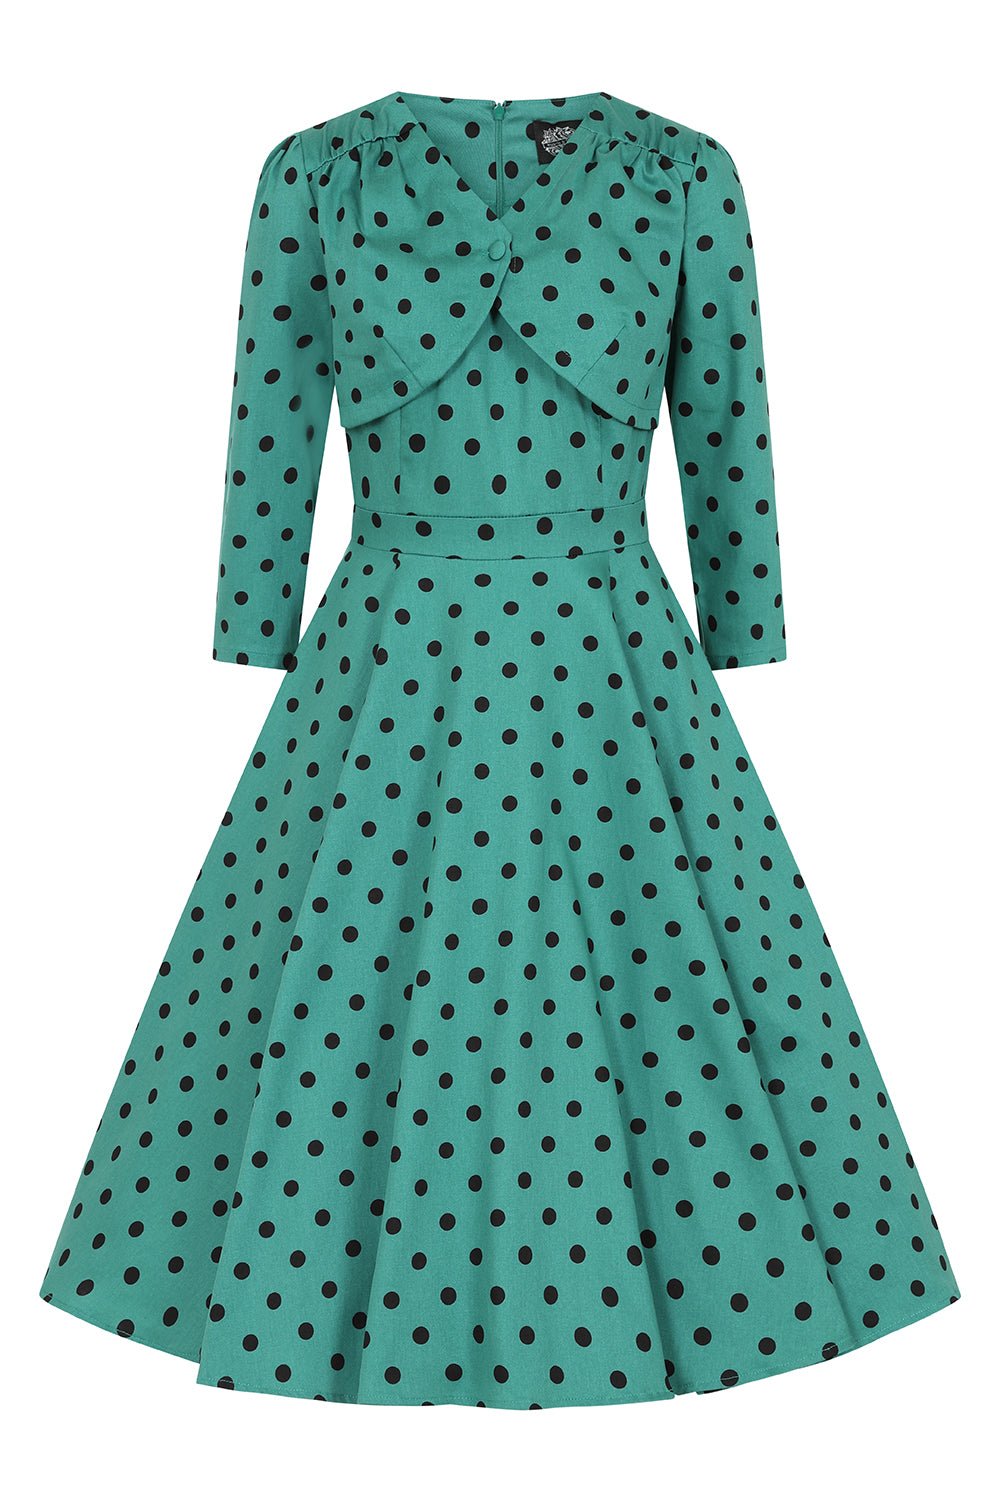 Finley Polka Dot Swing Dress - Rockamilly-Dresses-Vintage